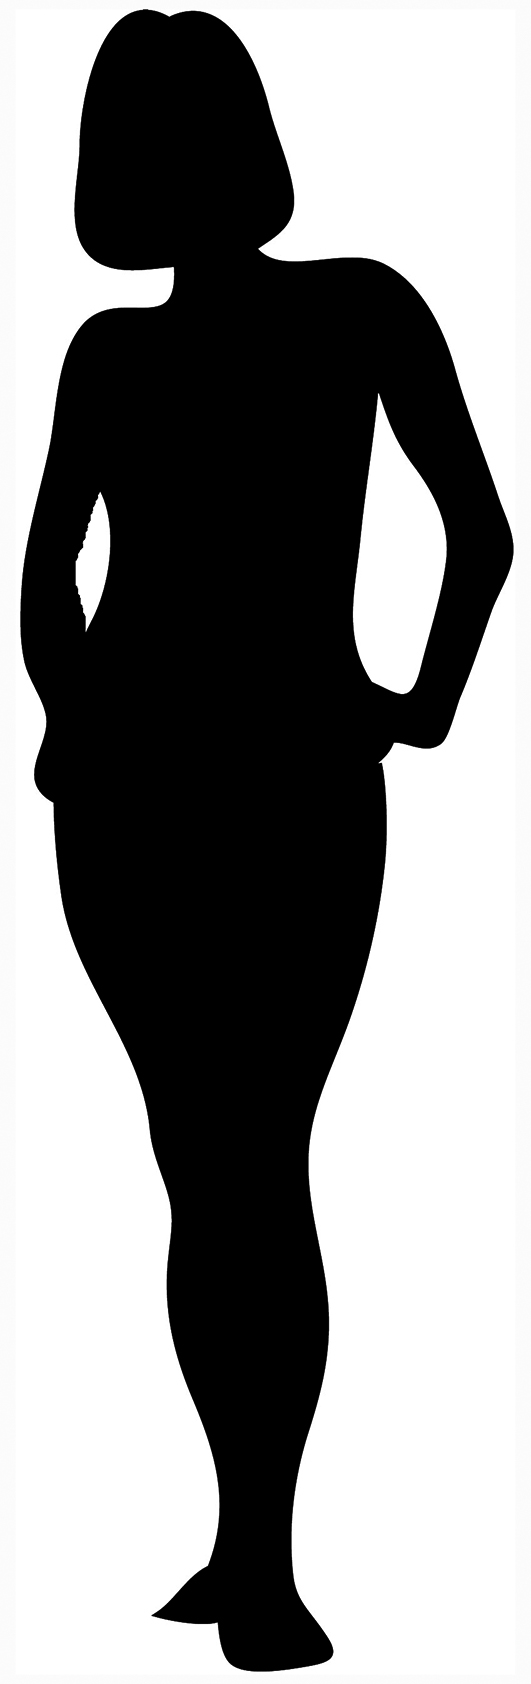 Black Woman Silhouette Clipart